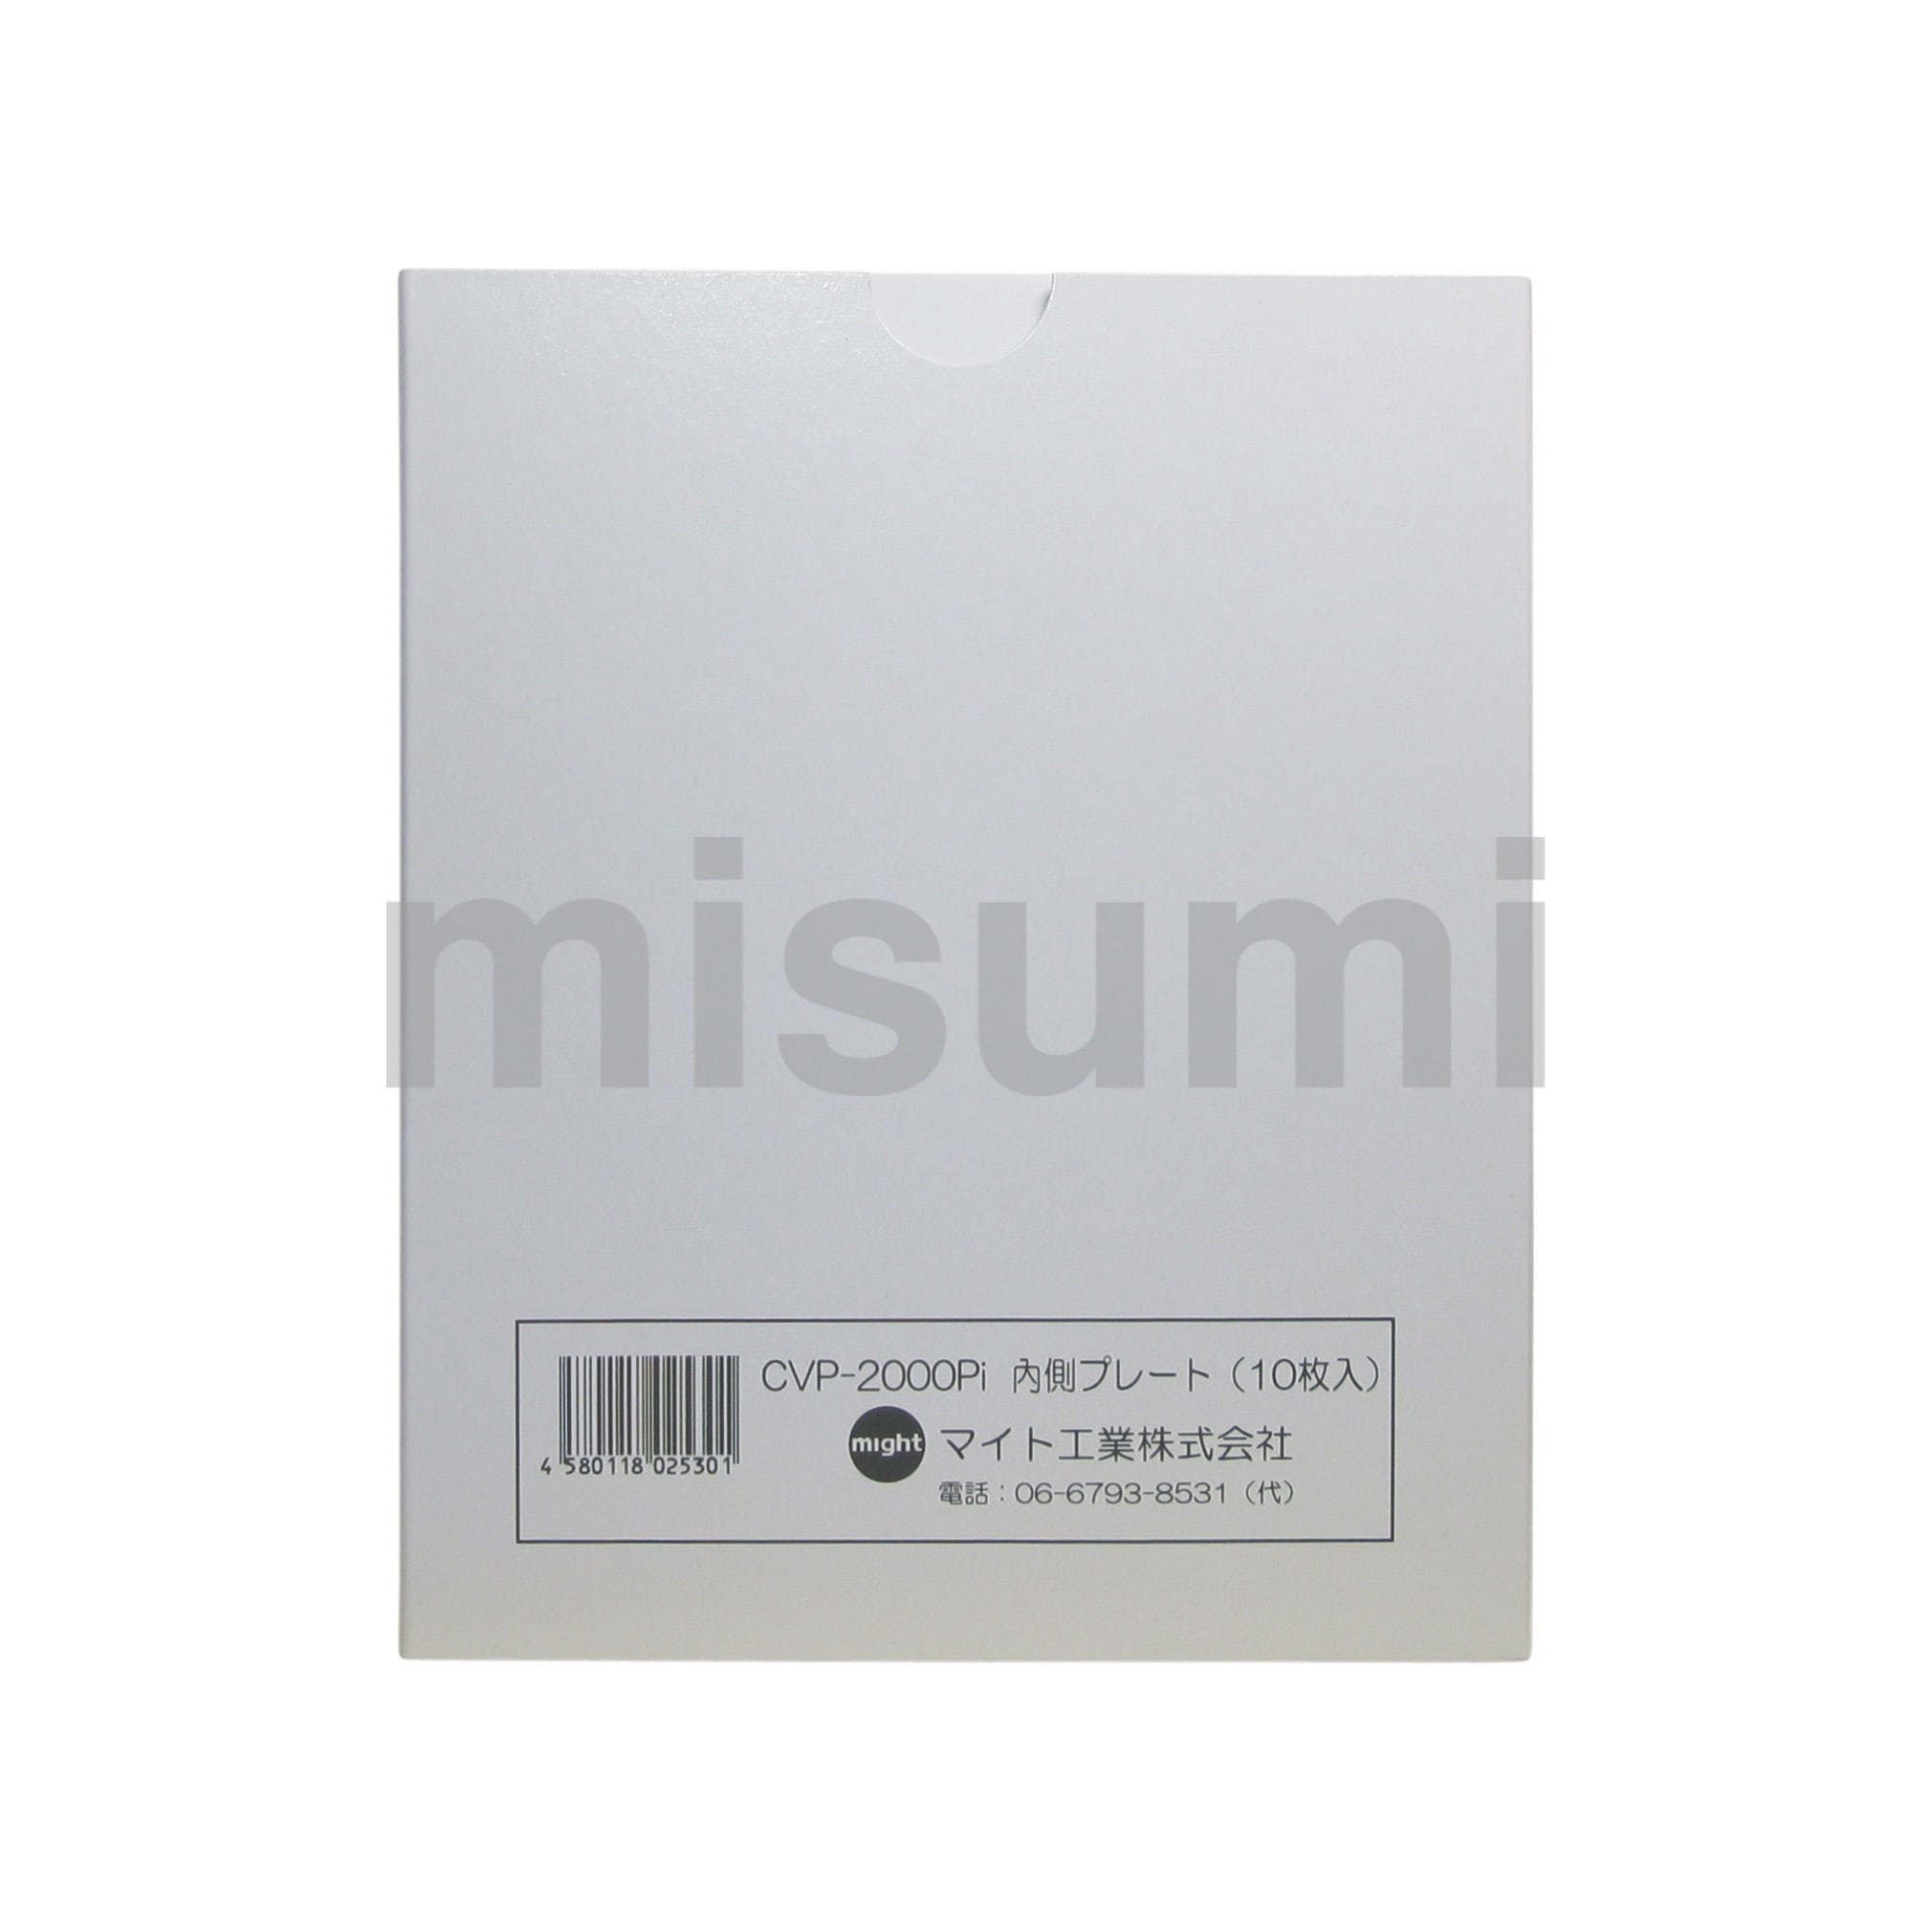 CVP-760PI 溶接面 レインボーマスクシリーズ用カバープレート マイト工業 MISUMI(ミスミ)